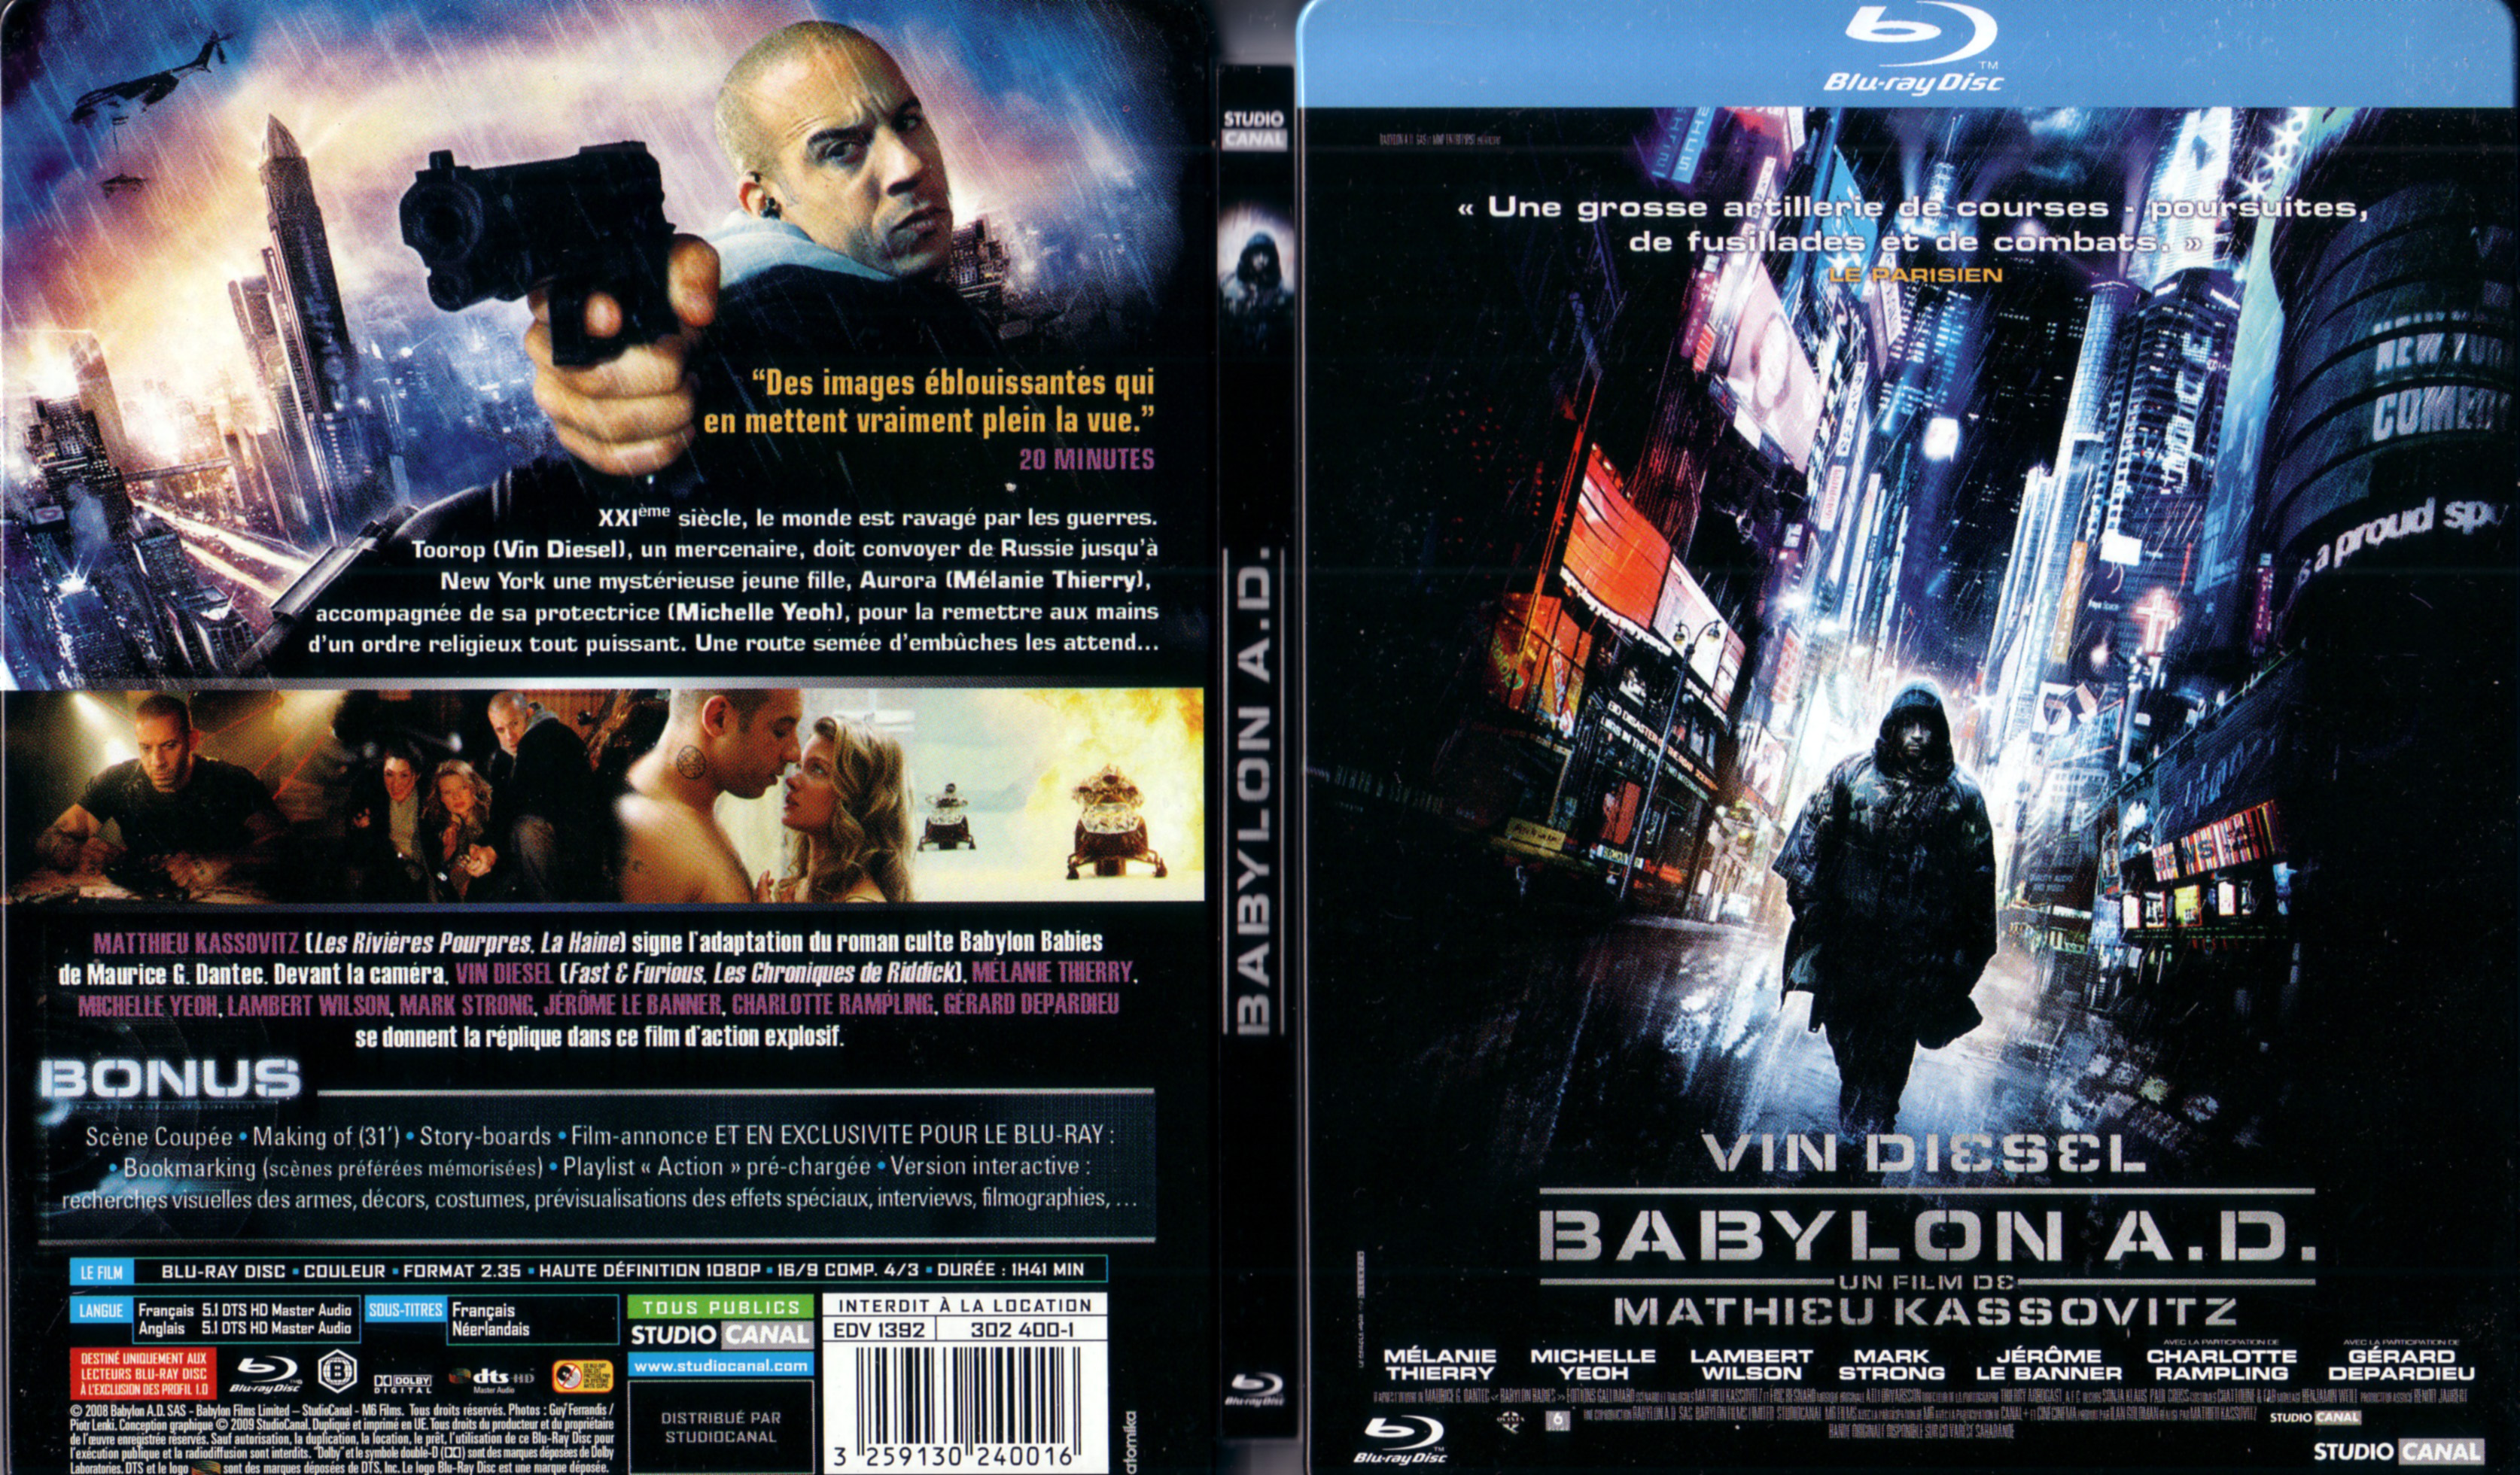 Jaquette DVD Babylon AD (BLU-RAY)